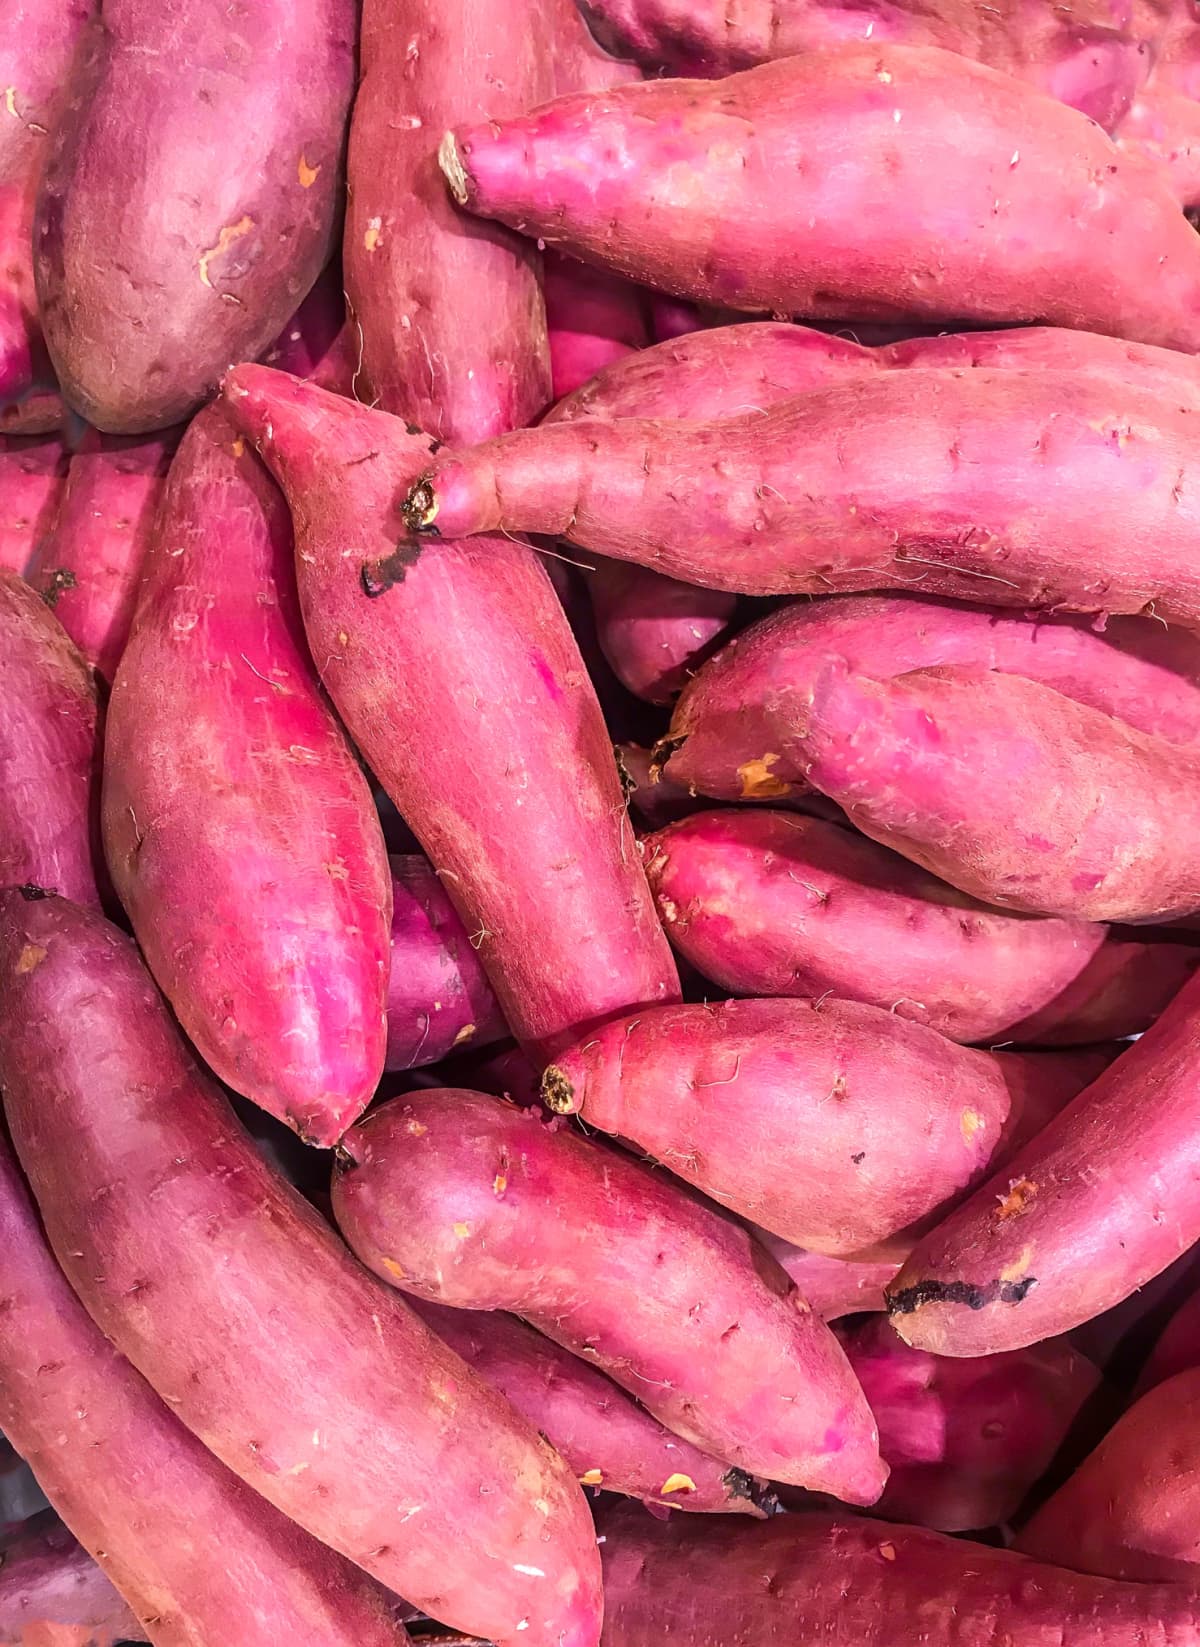 Pile of purple sweet potatoes